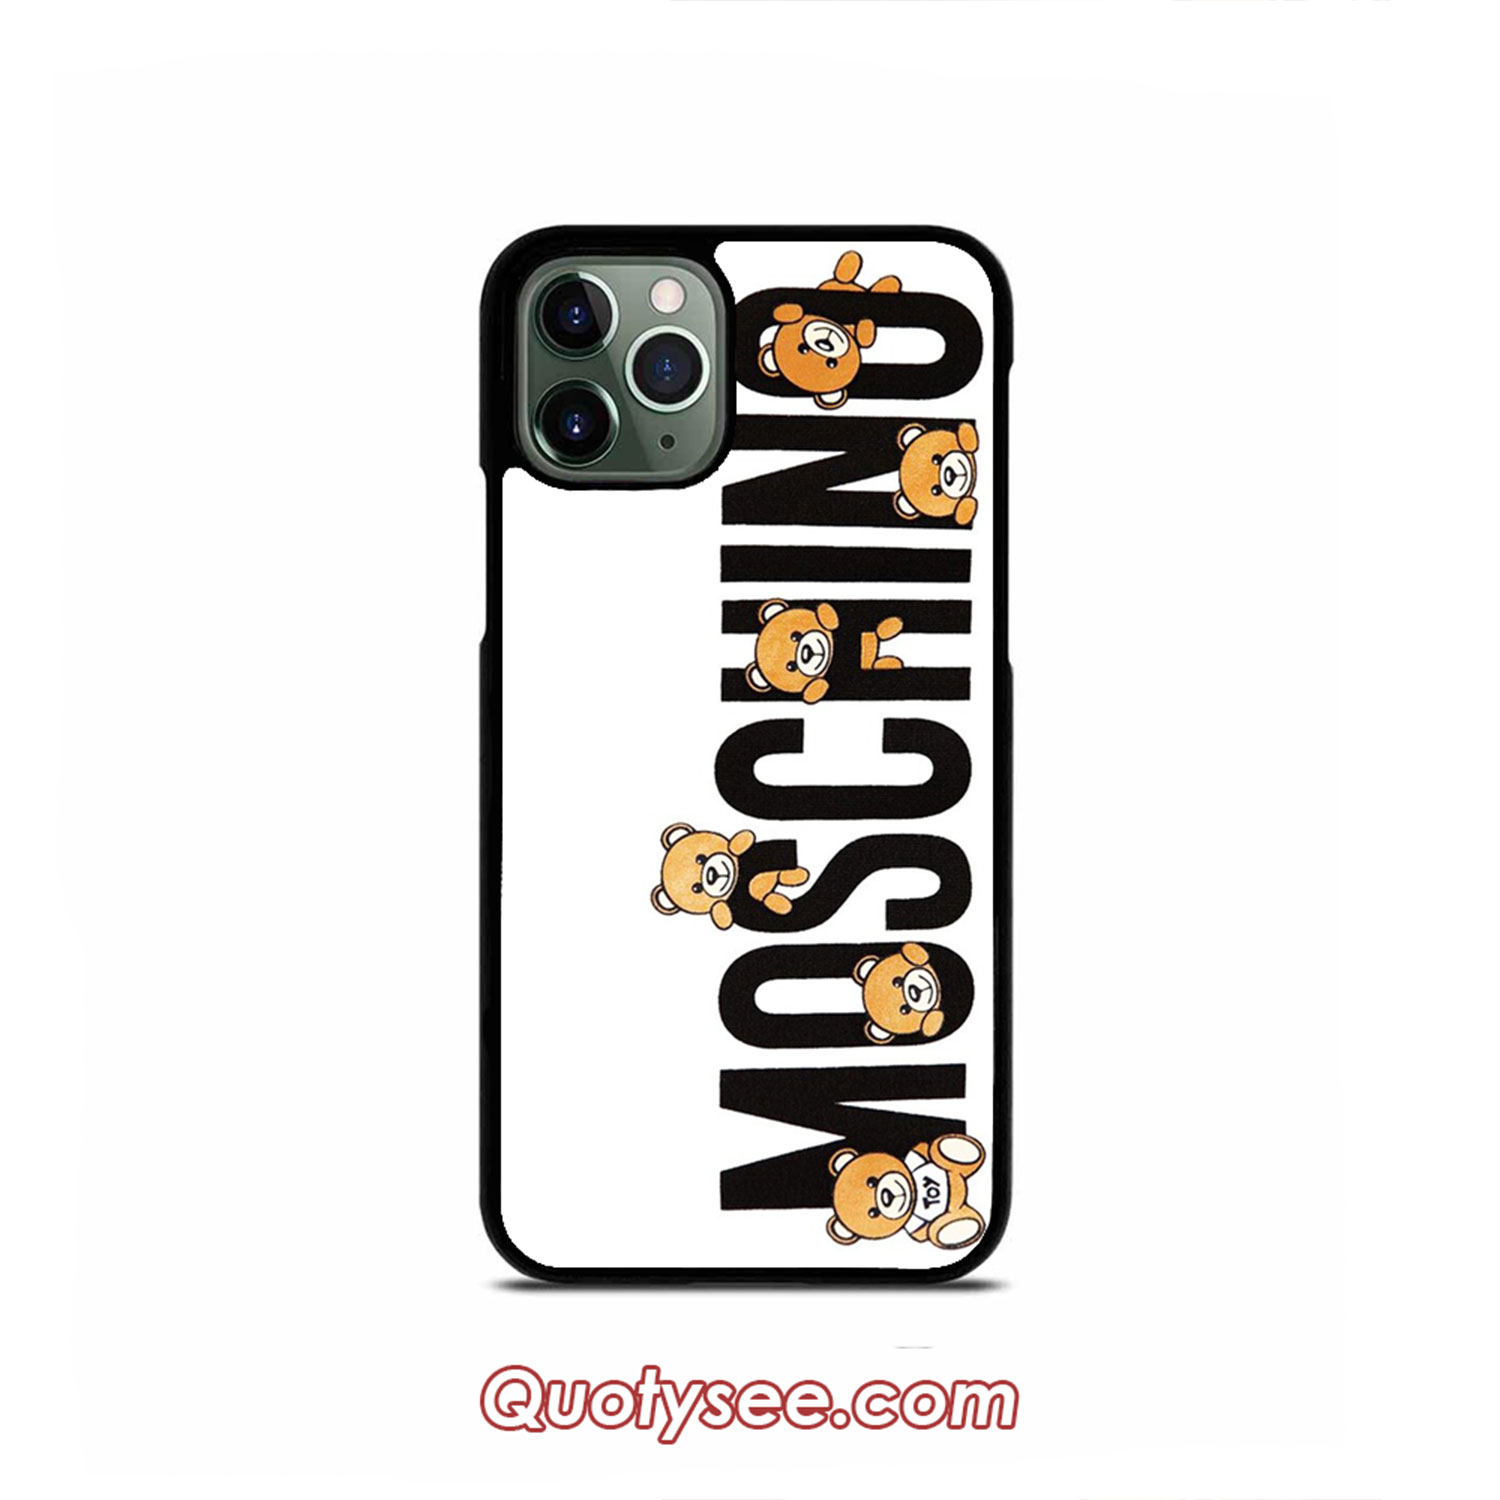 Cute Moschino iPhone Case Pro/11 Pro Max,XS Plus,7/7 Plus,6/6S | Quotysee.com